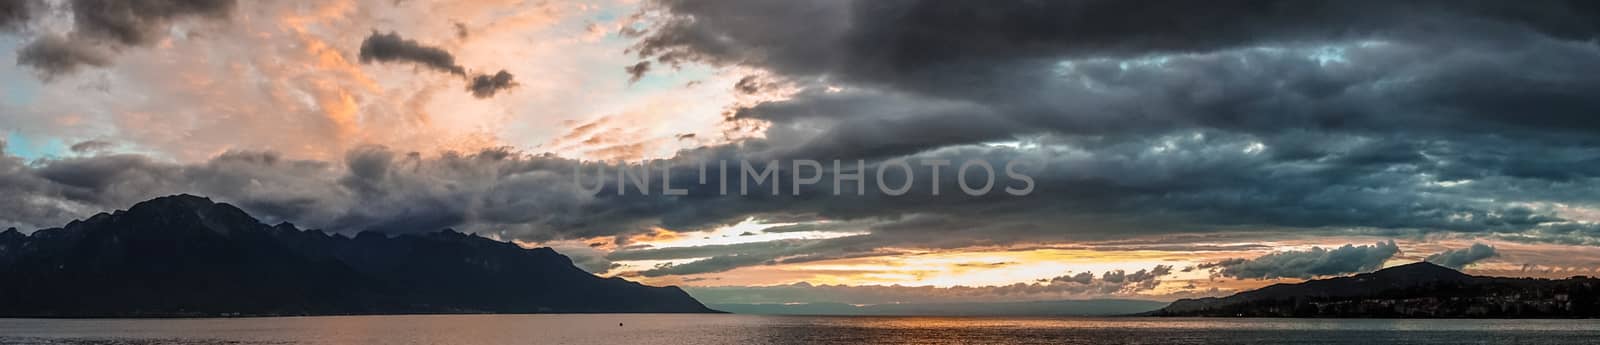 Sunset over Lake Geneva at Montreux